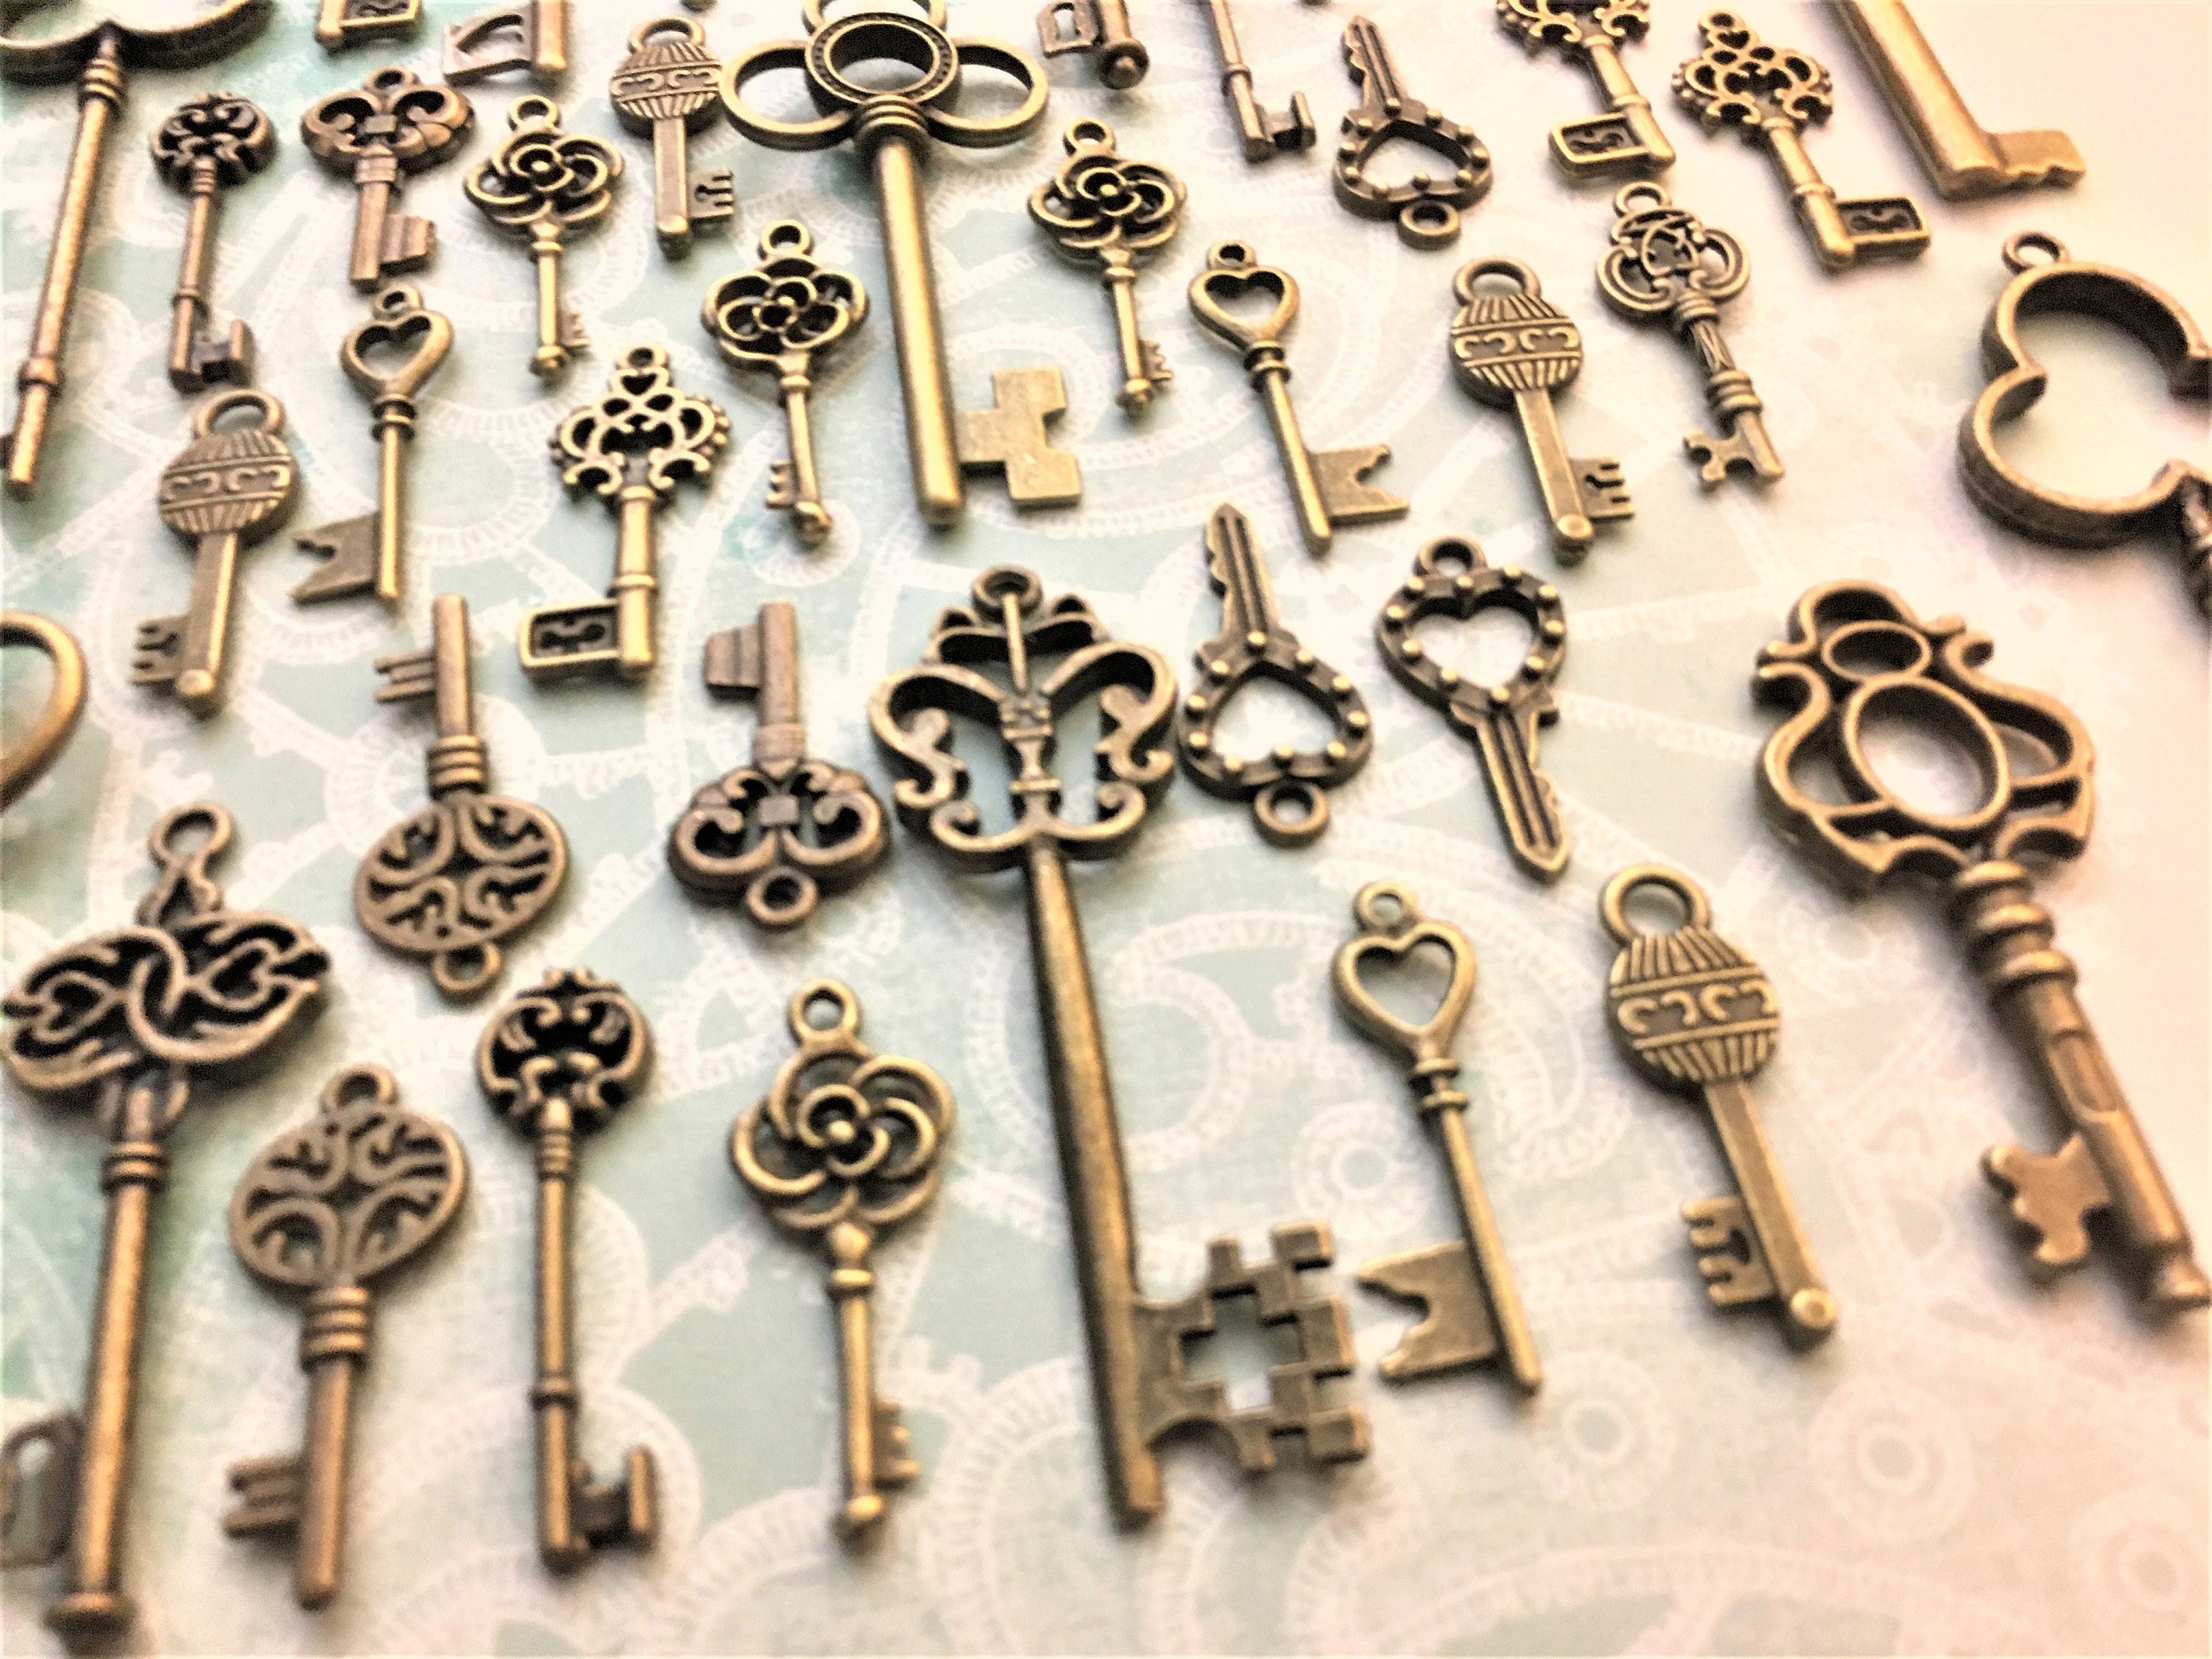  Micro Trader 70pcs Skeleton Antique Keys Vintage Bronze  Pendants Old Fashion Decor Gift : Arts, Crafts & Sewing